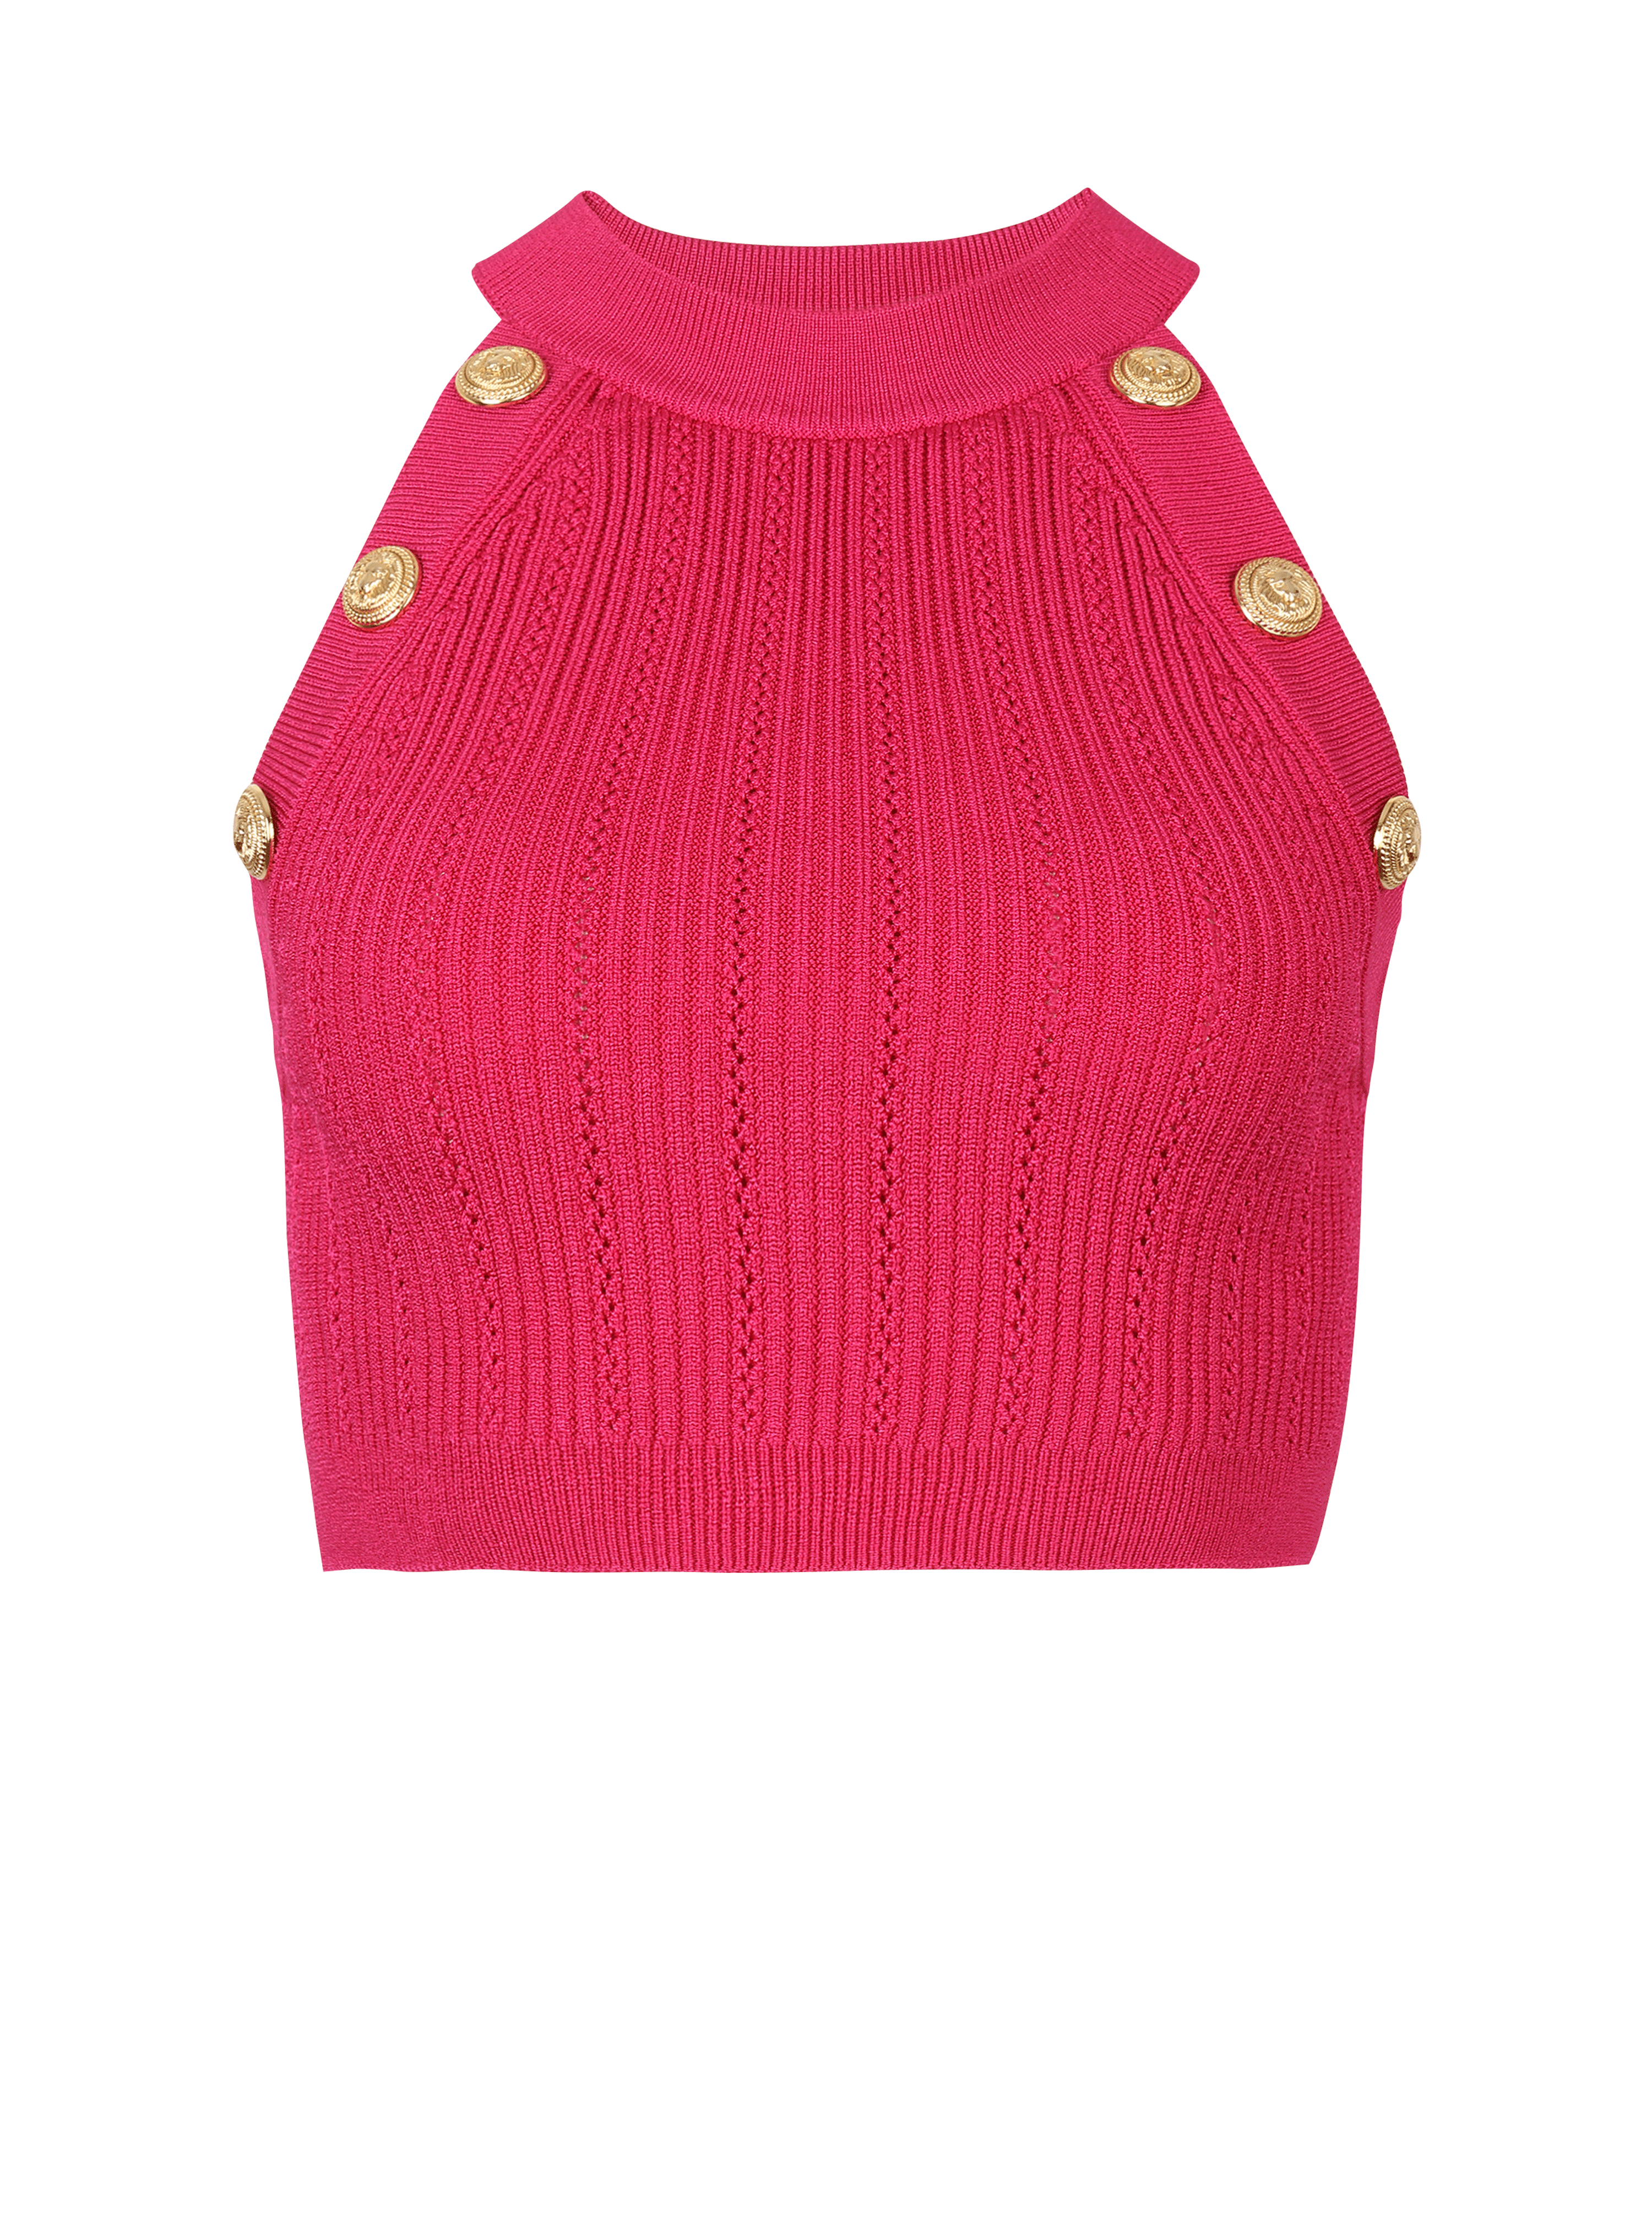 Knit crop top, pink